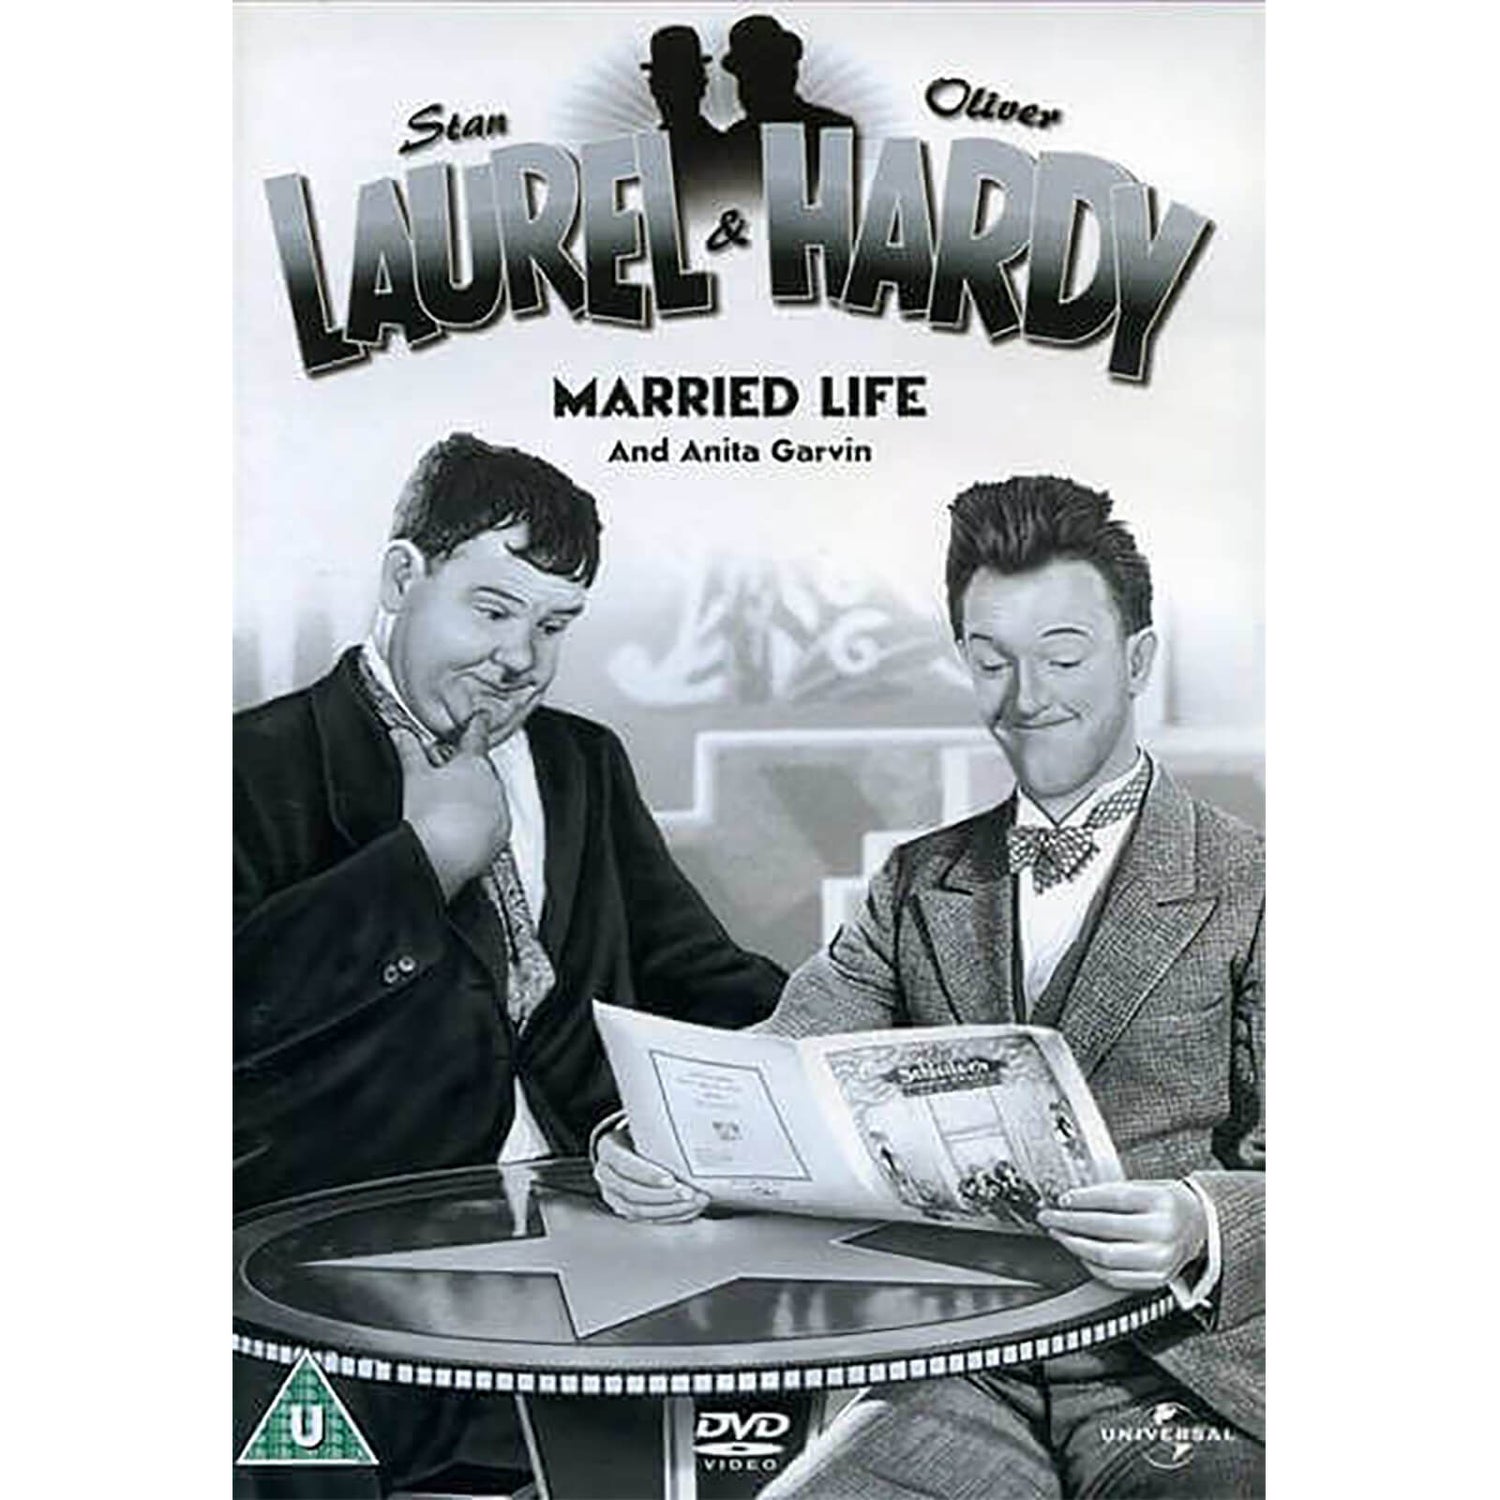 Laurel & Hardy - Married Life And Anita Garvin